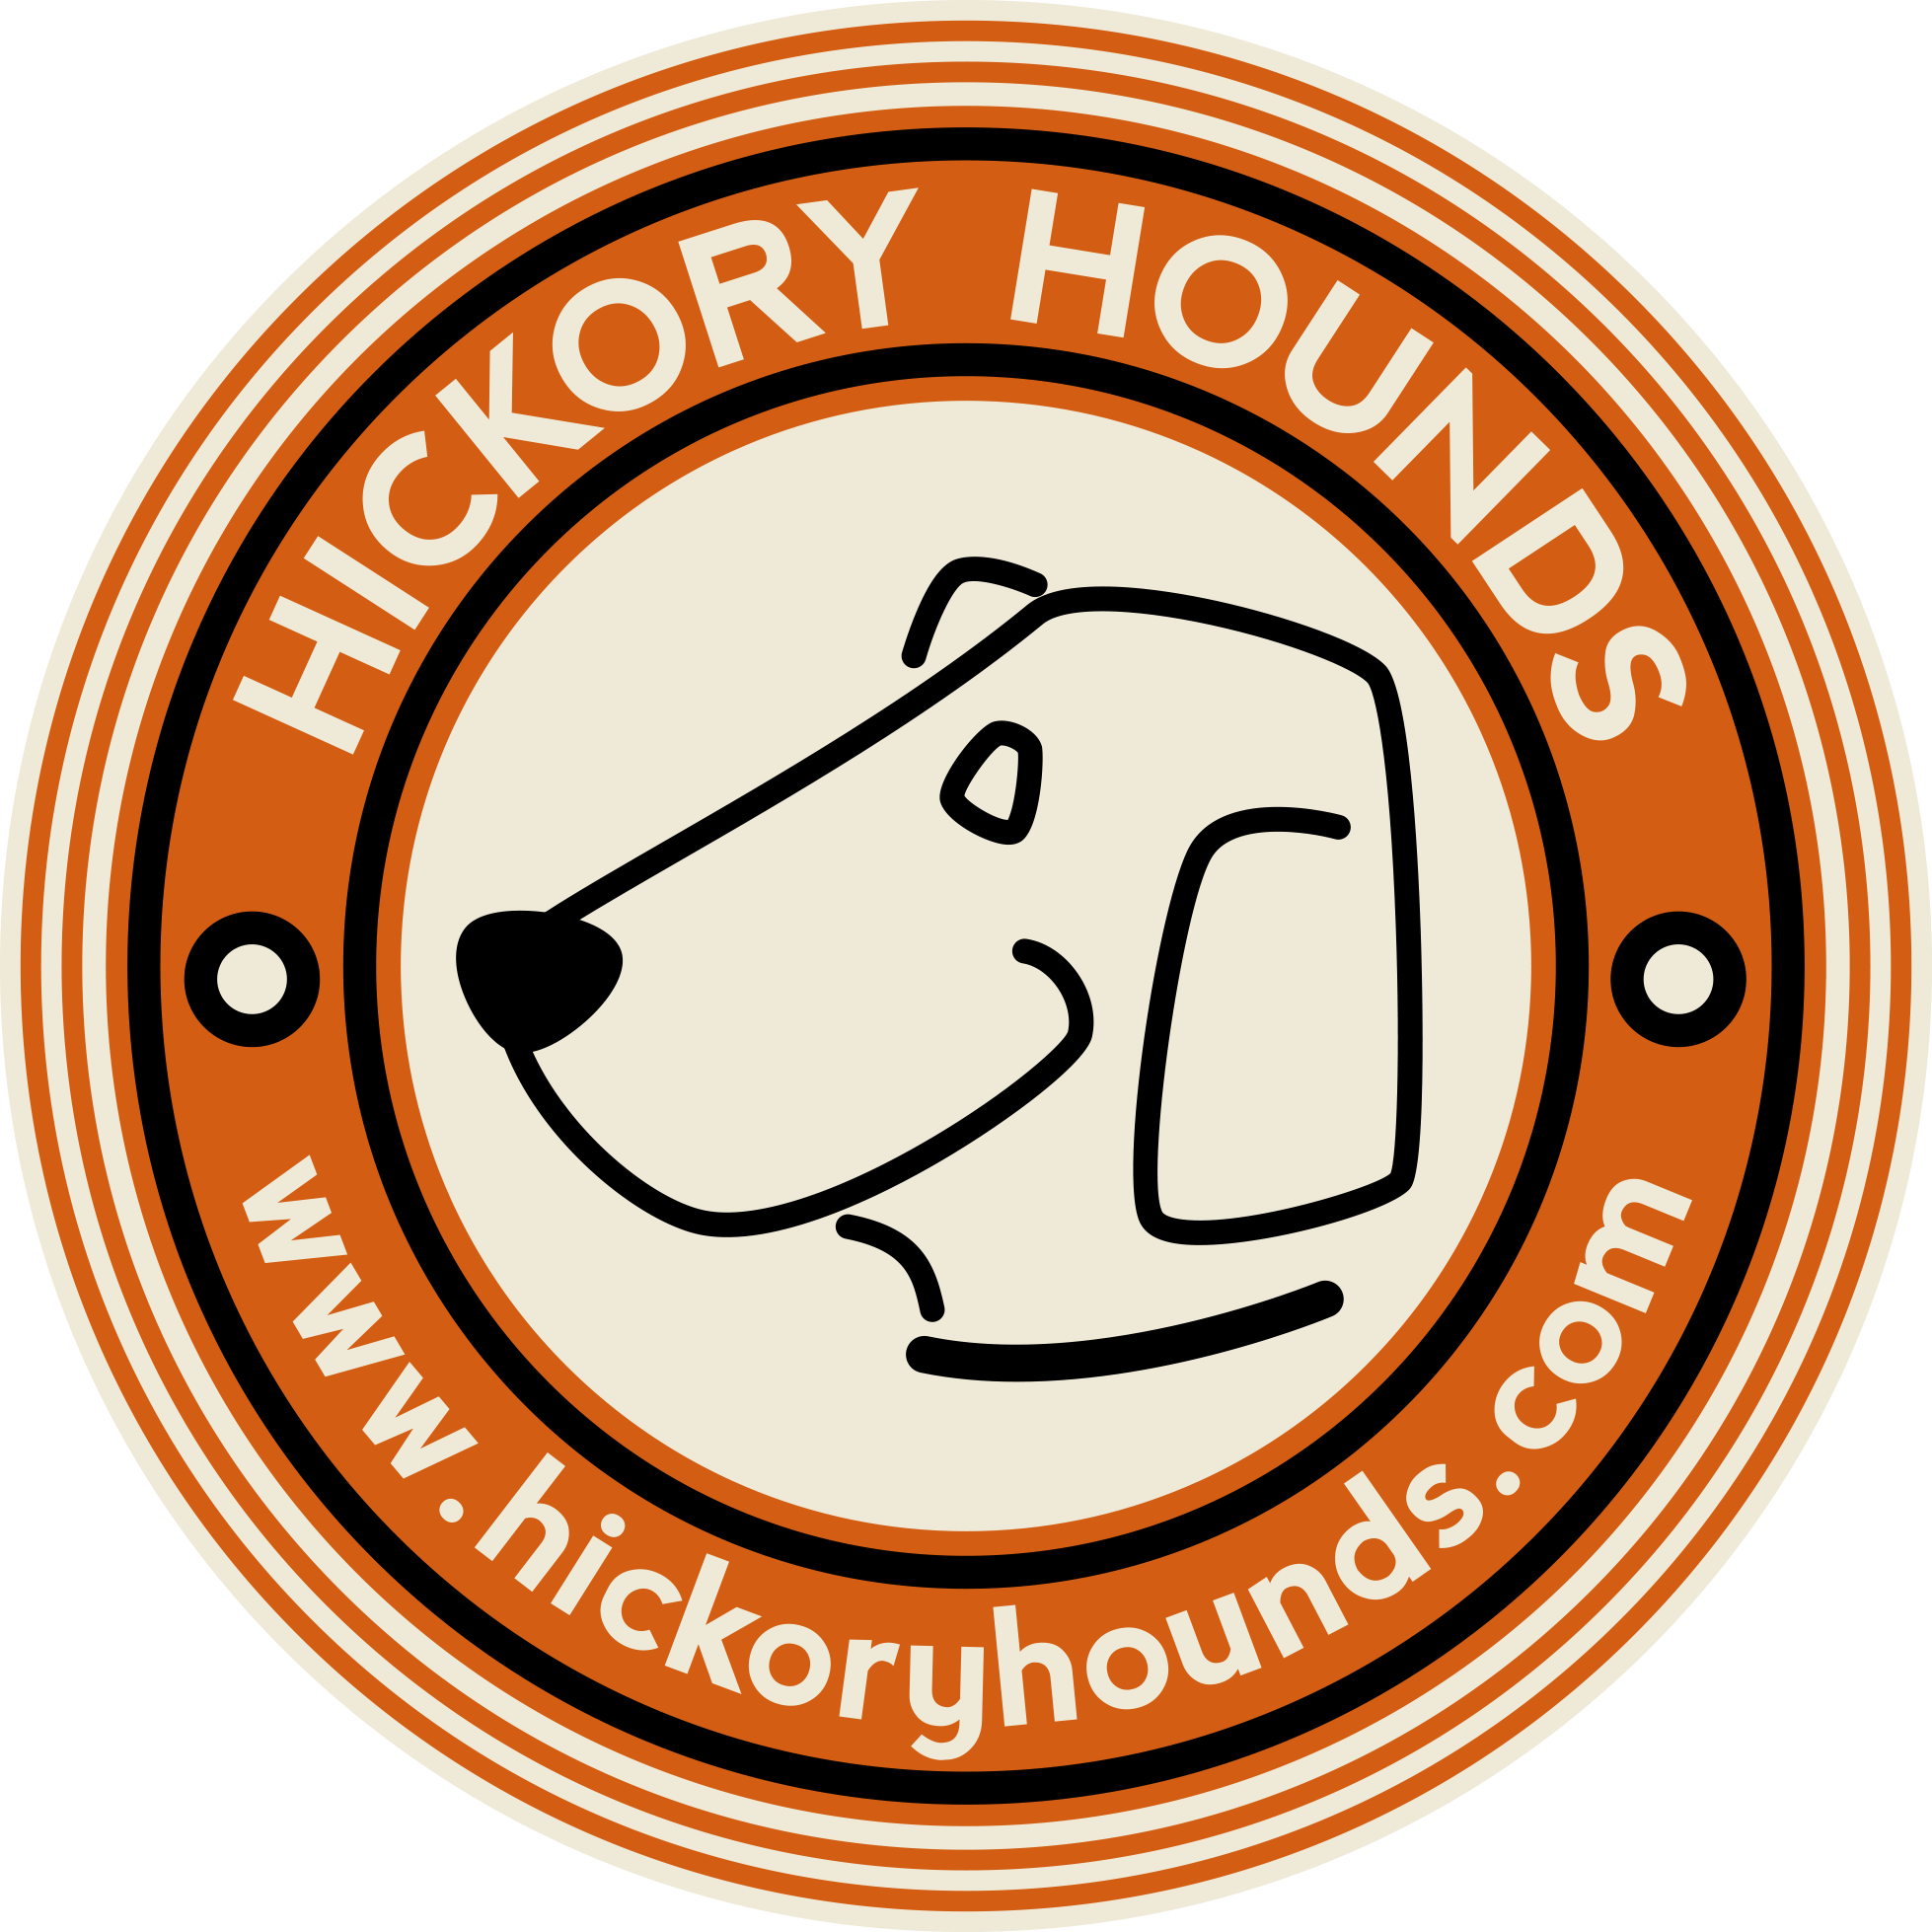 Hickory Hounds - Dog Training